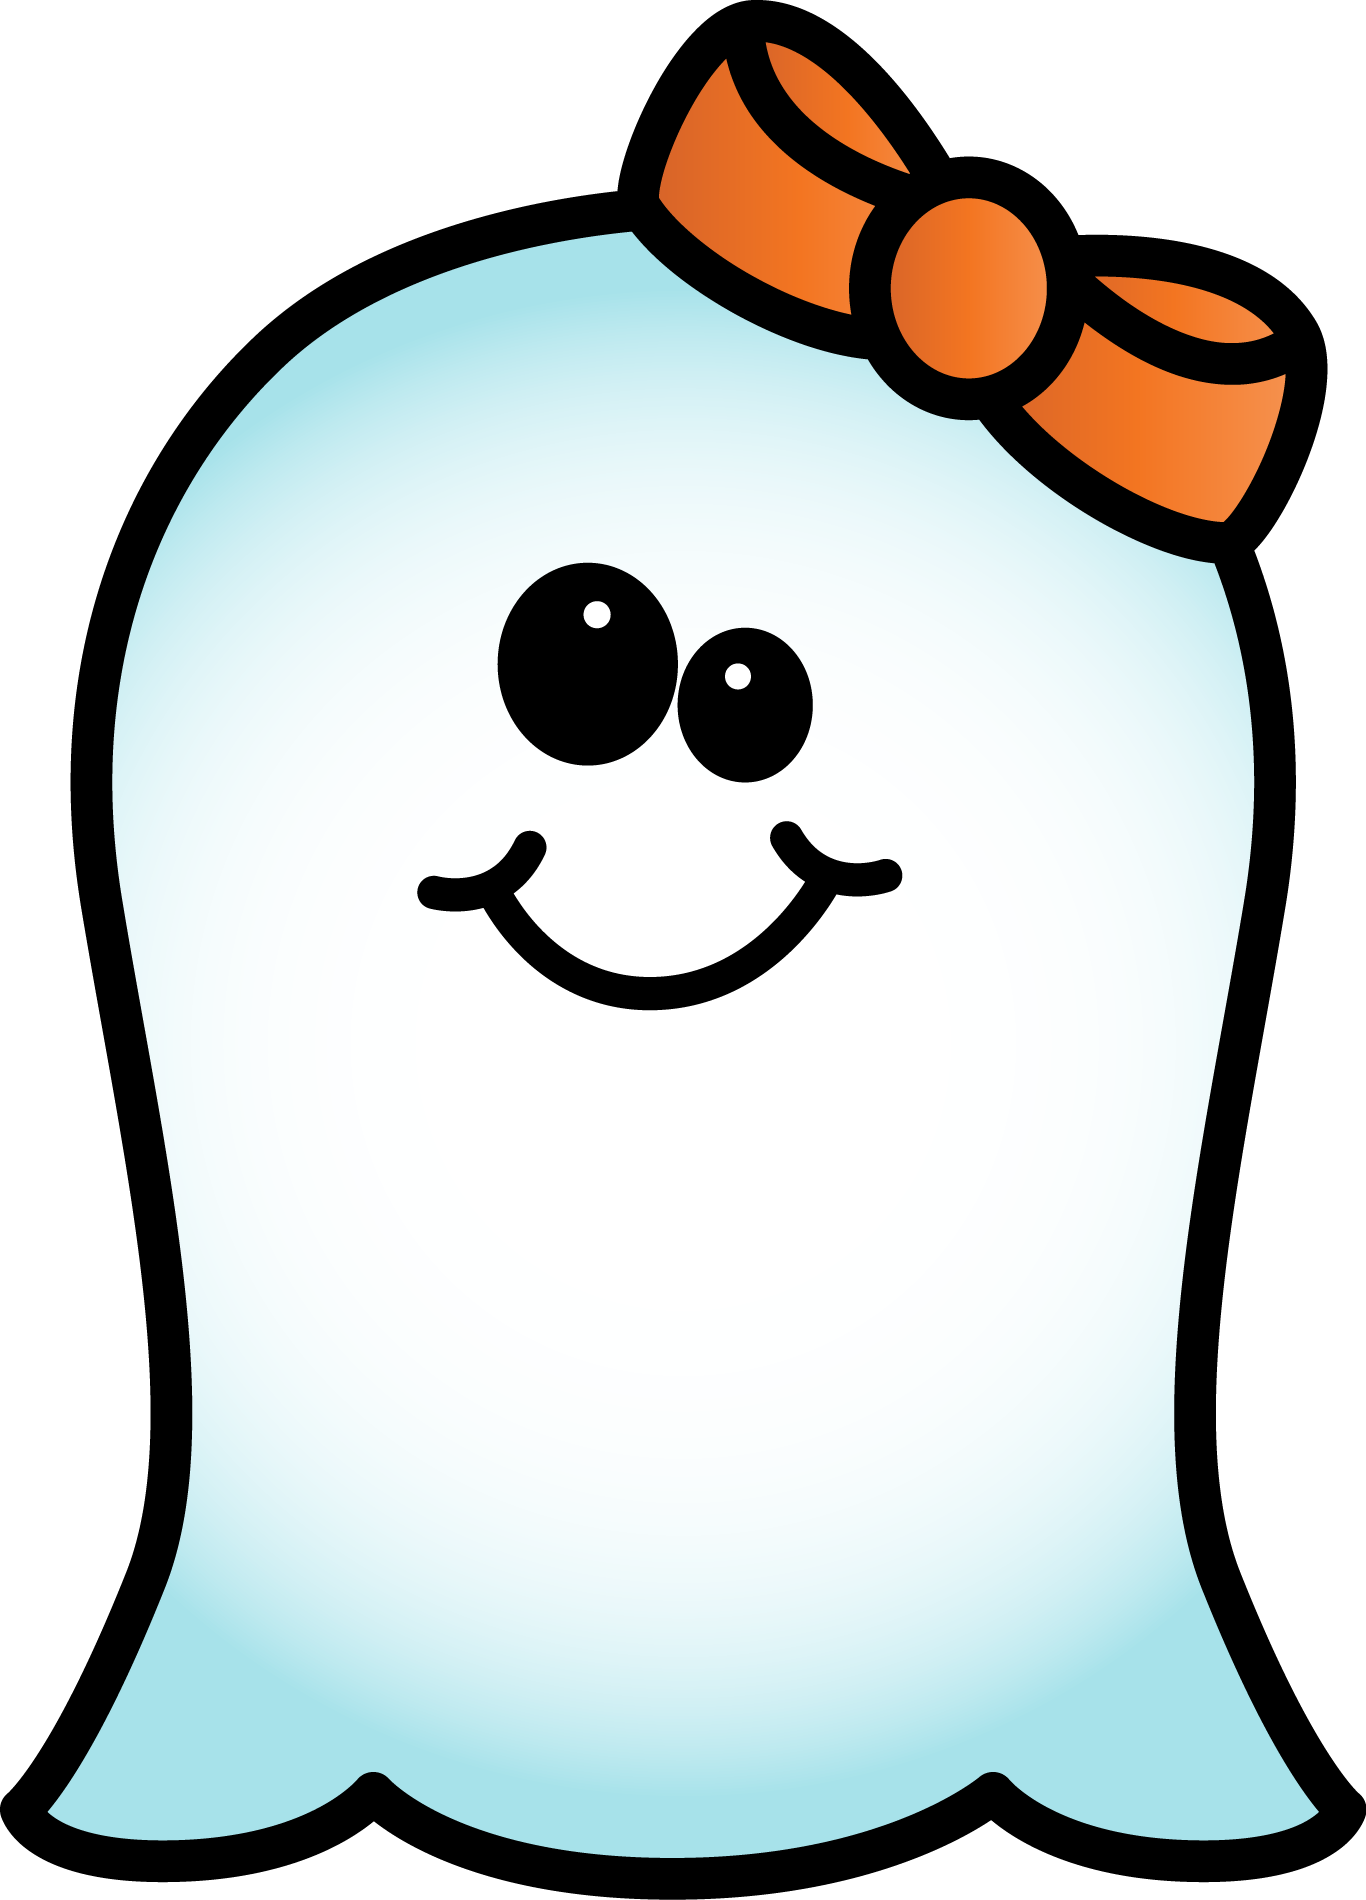 Homework Ghost - Cute Halloween Ghost Clipart (1366x1900)